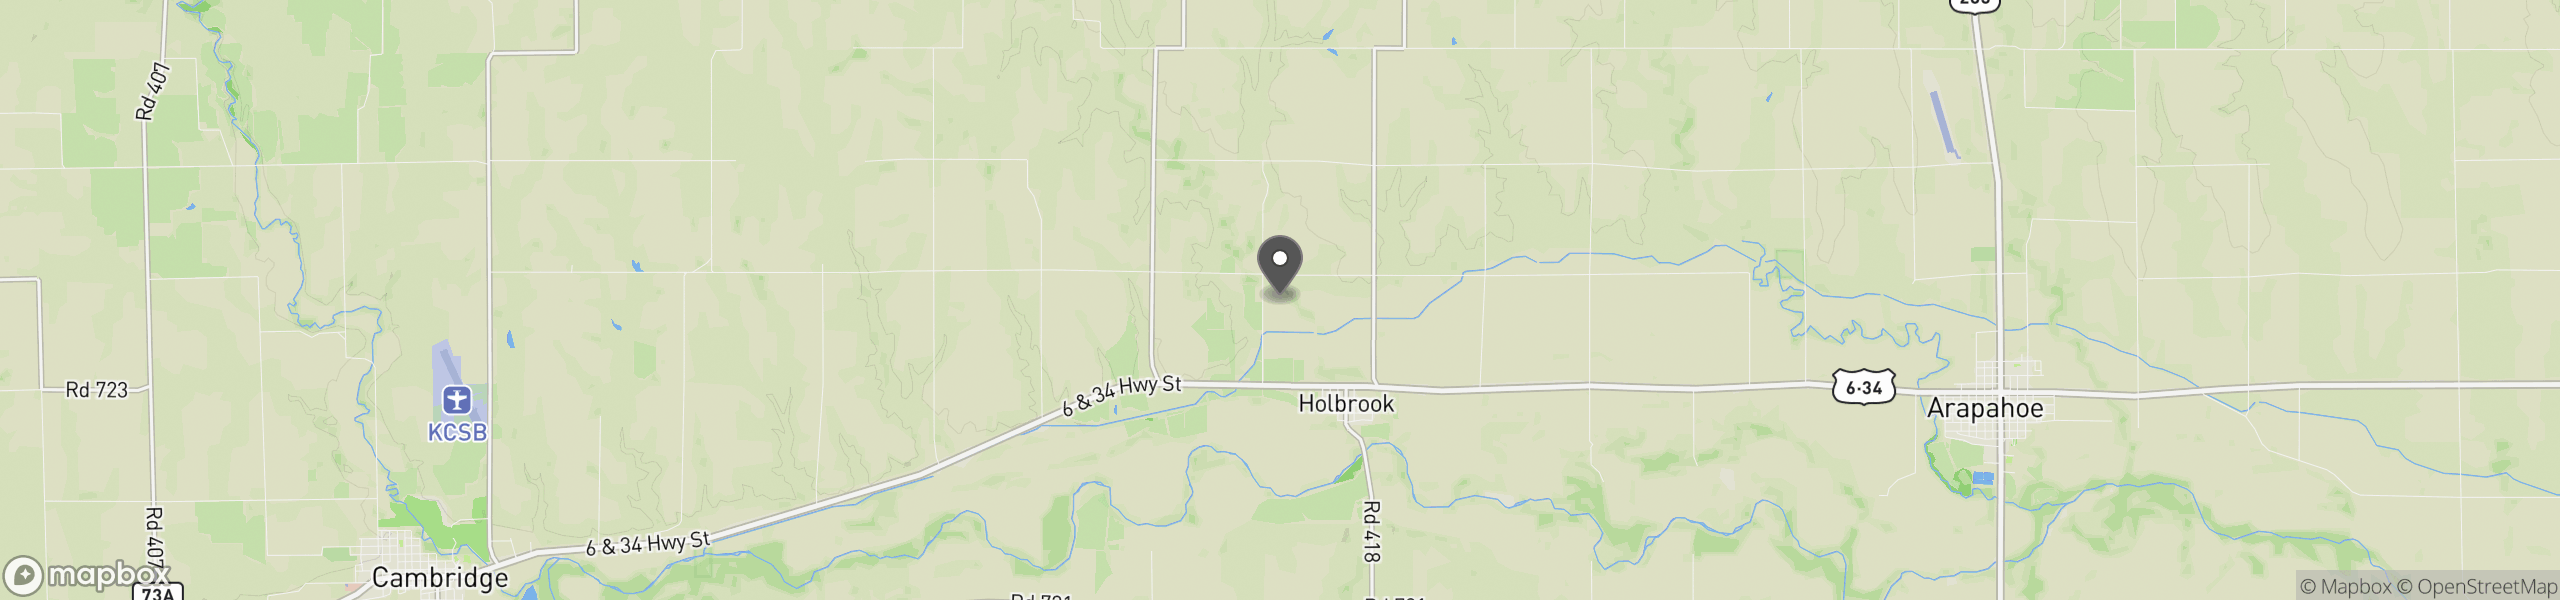 Holbrook, NE 68948